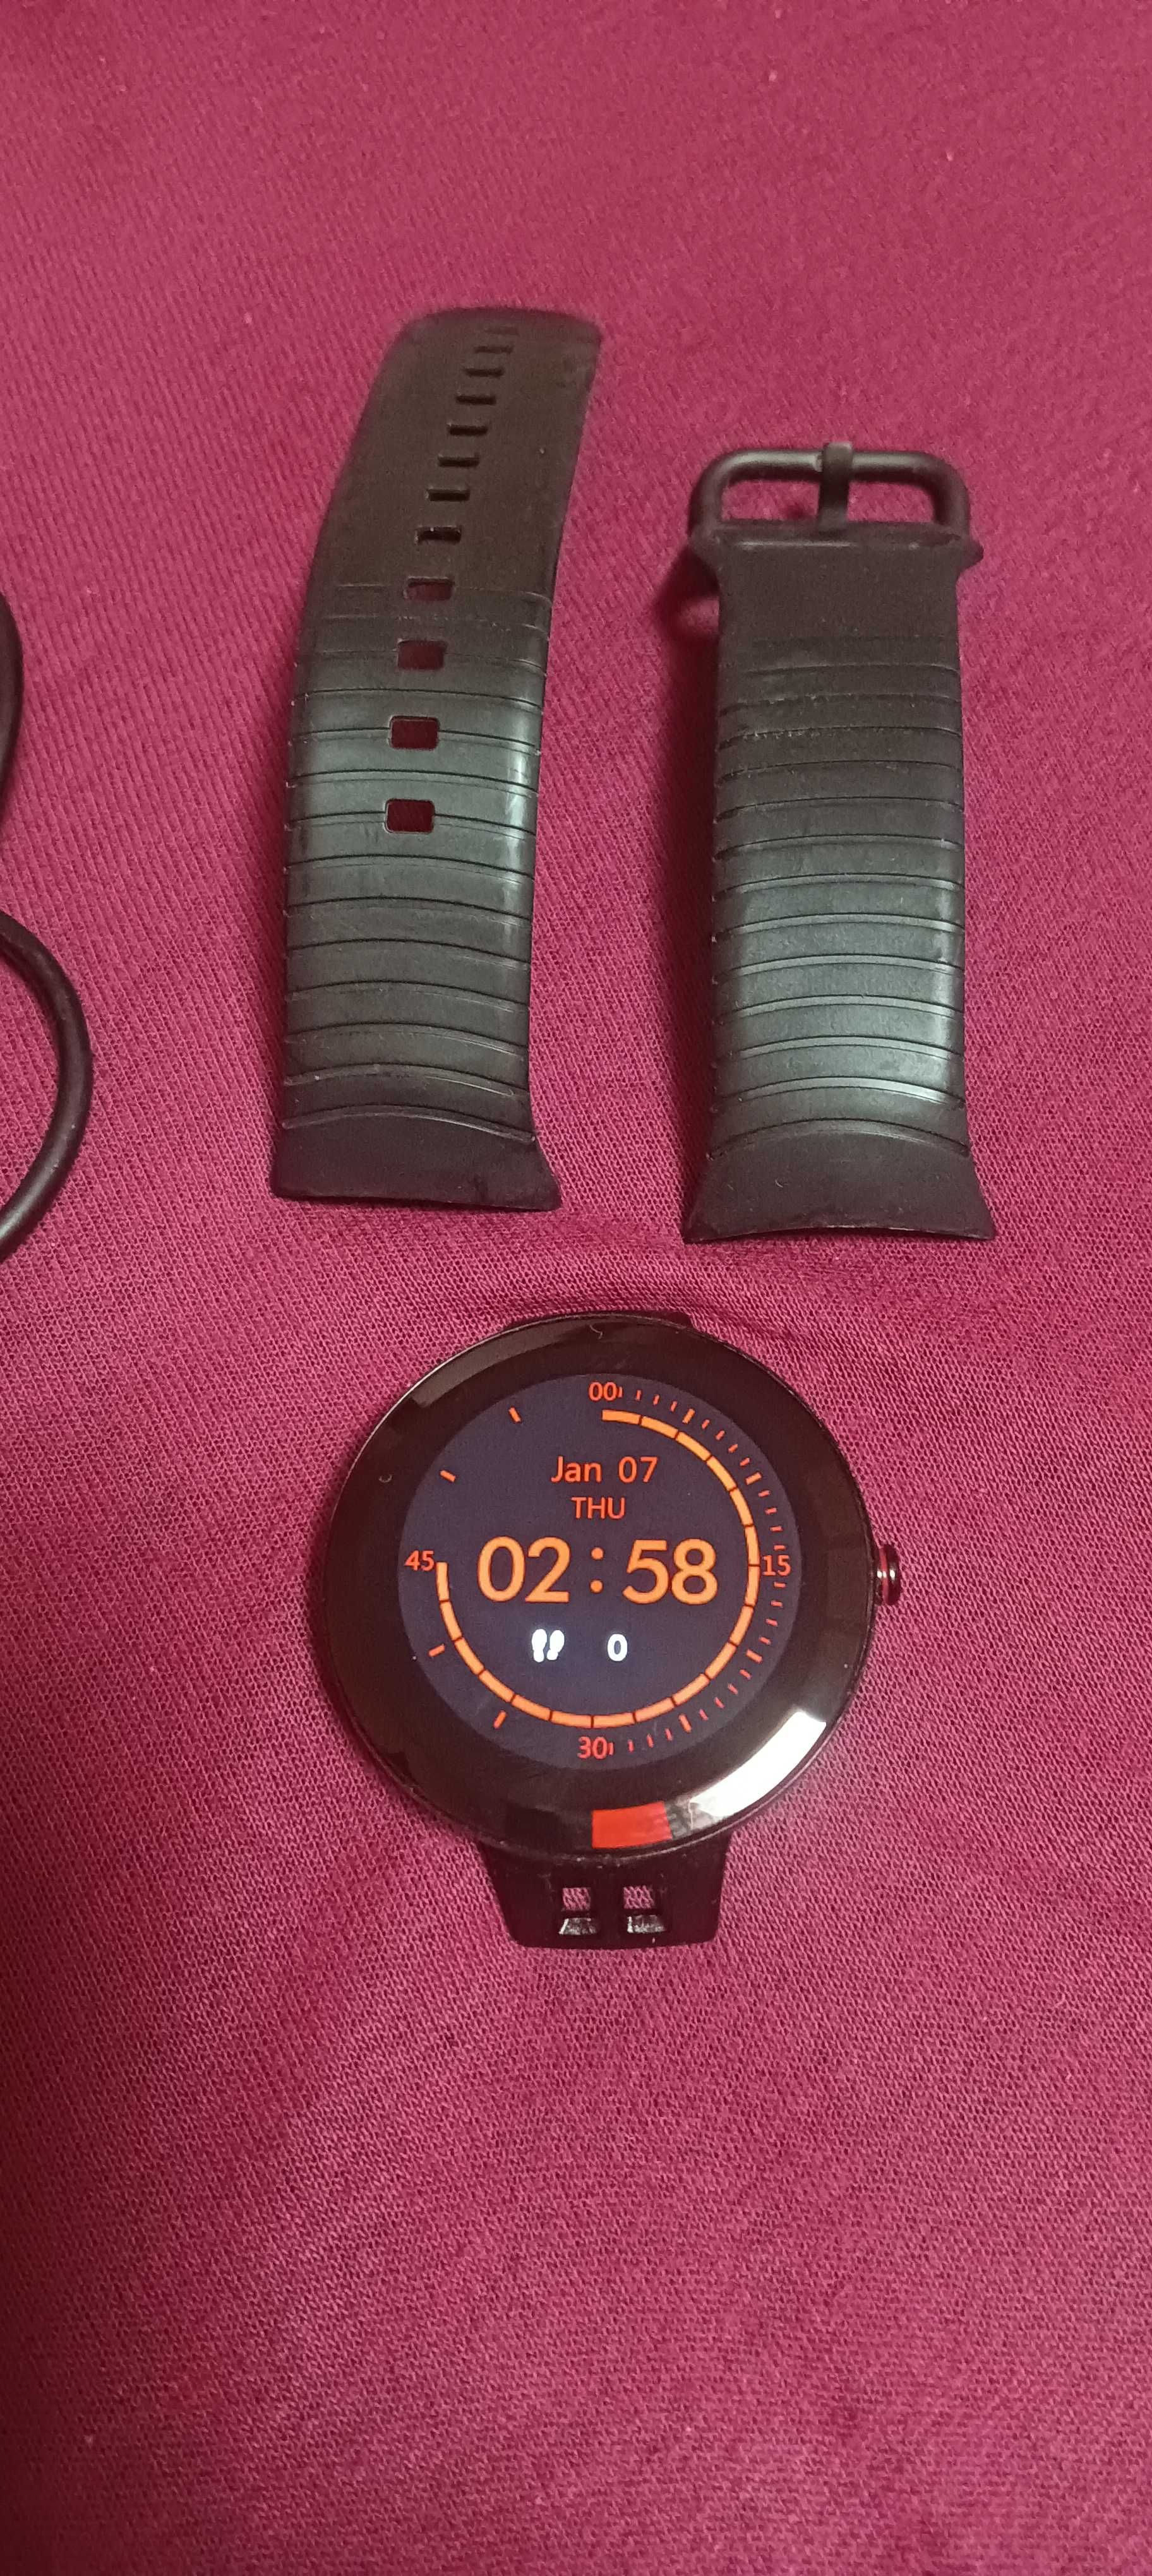 Męski zegarek smartwatch E3